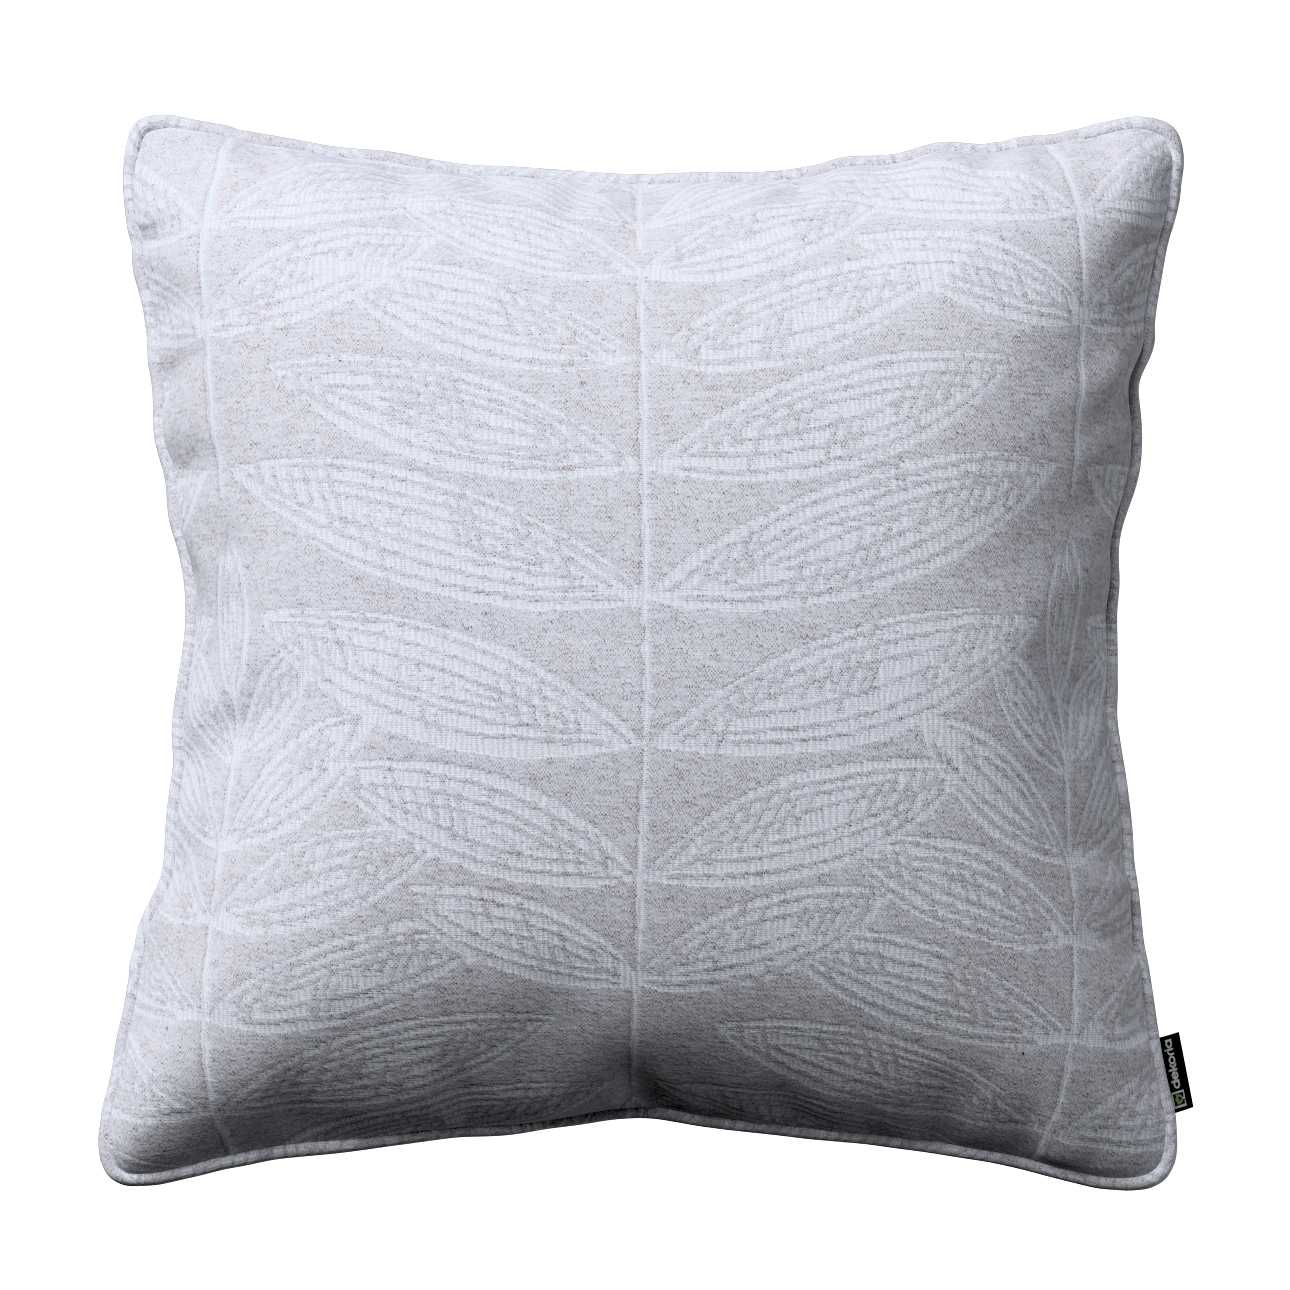 Kissenhülle Gabi mit Paspel, weiß-grau, 60 x 60 cm, Sunny (143-84) günstig online kaufen